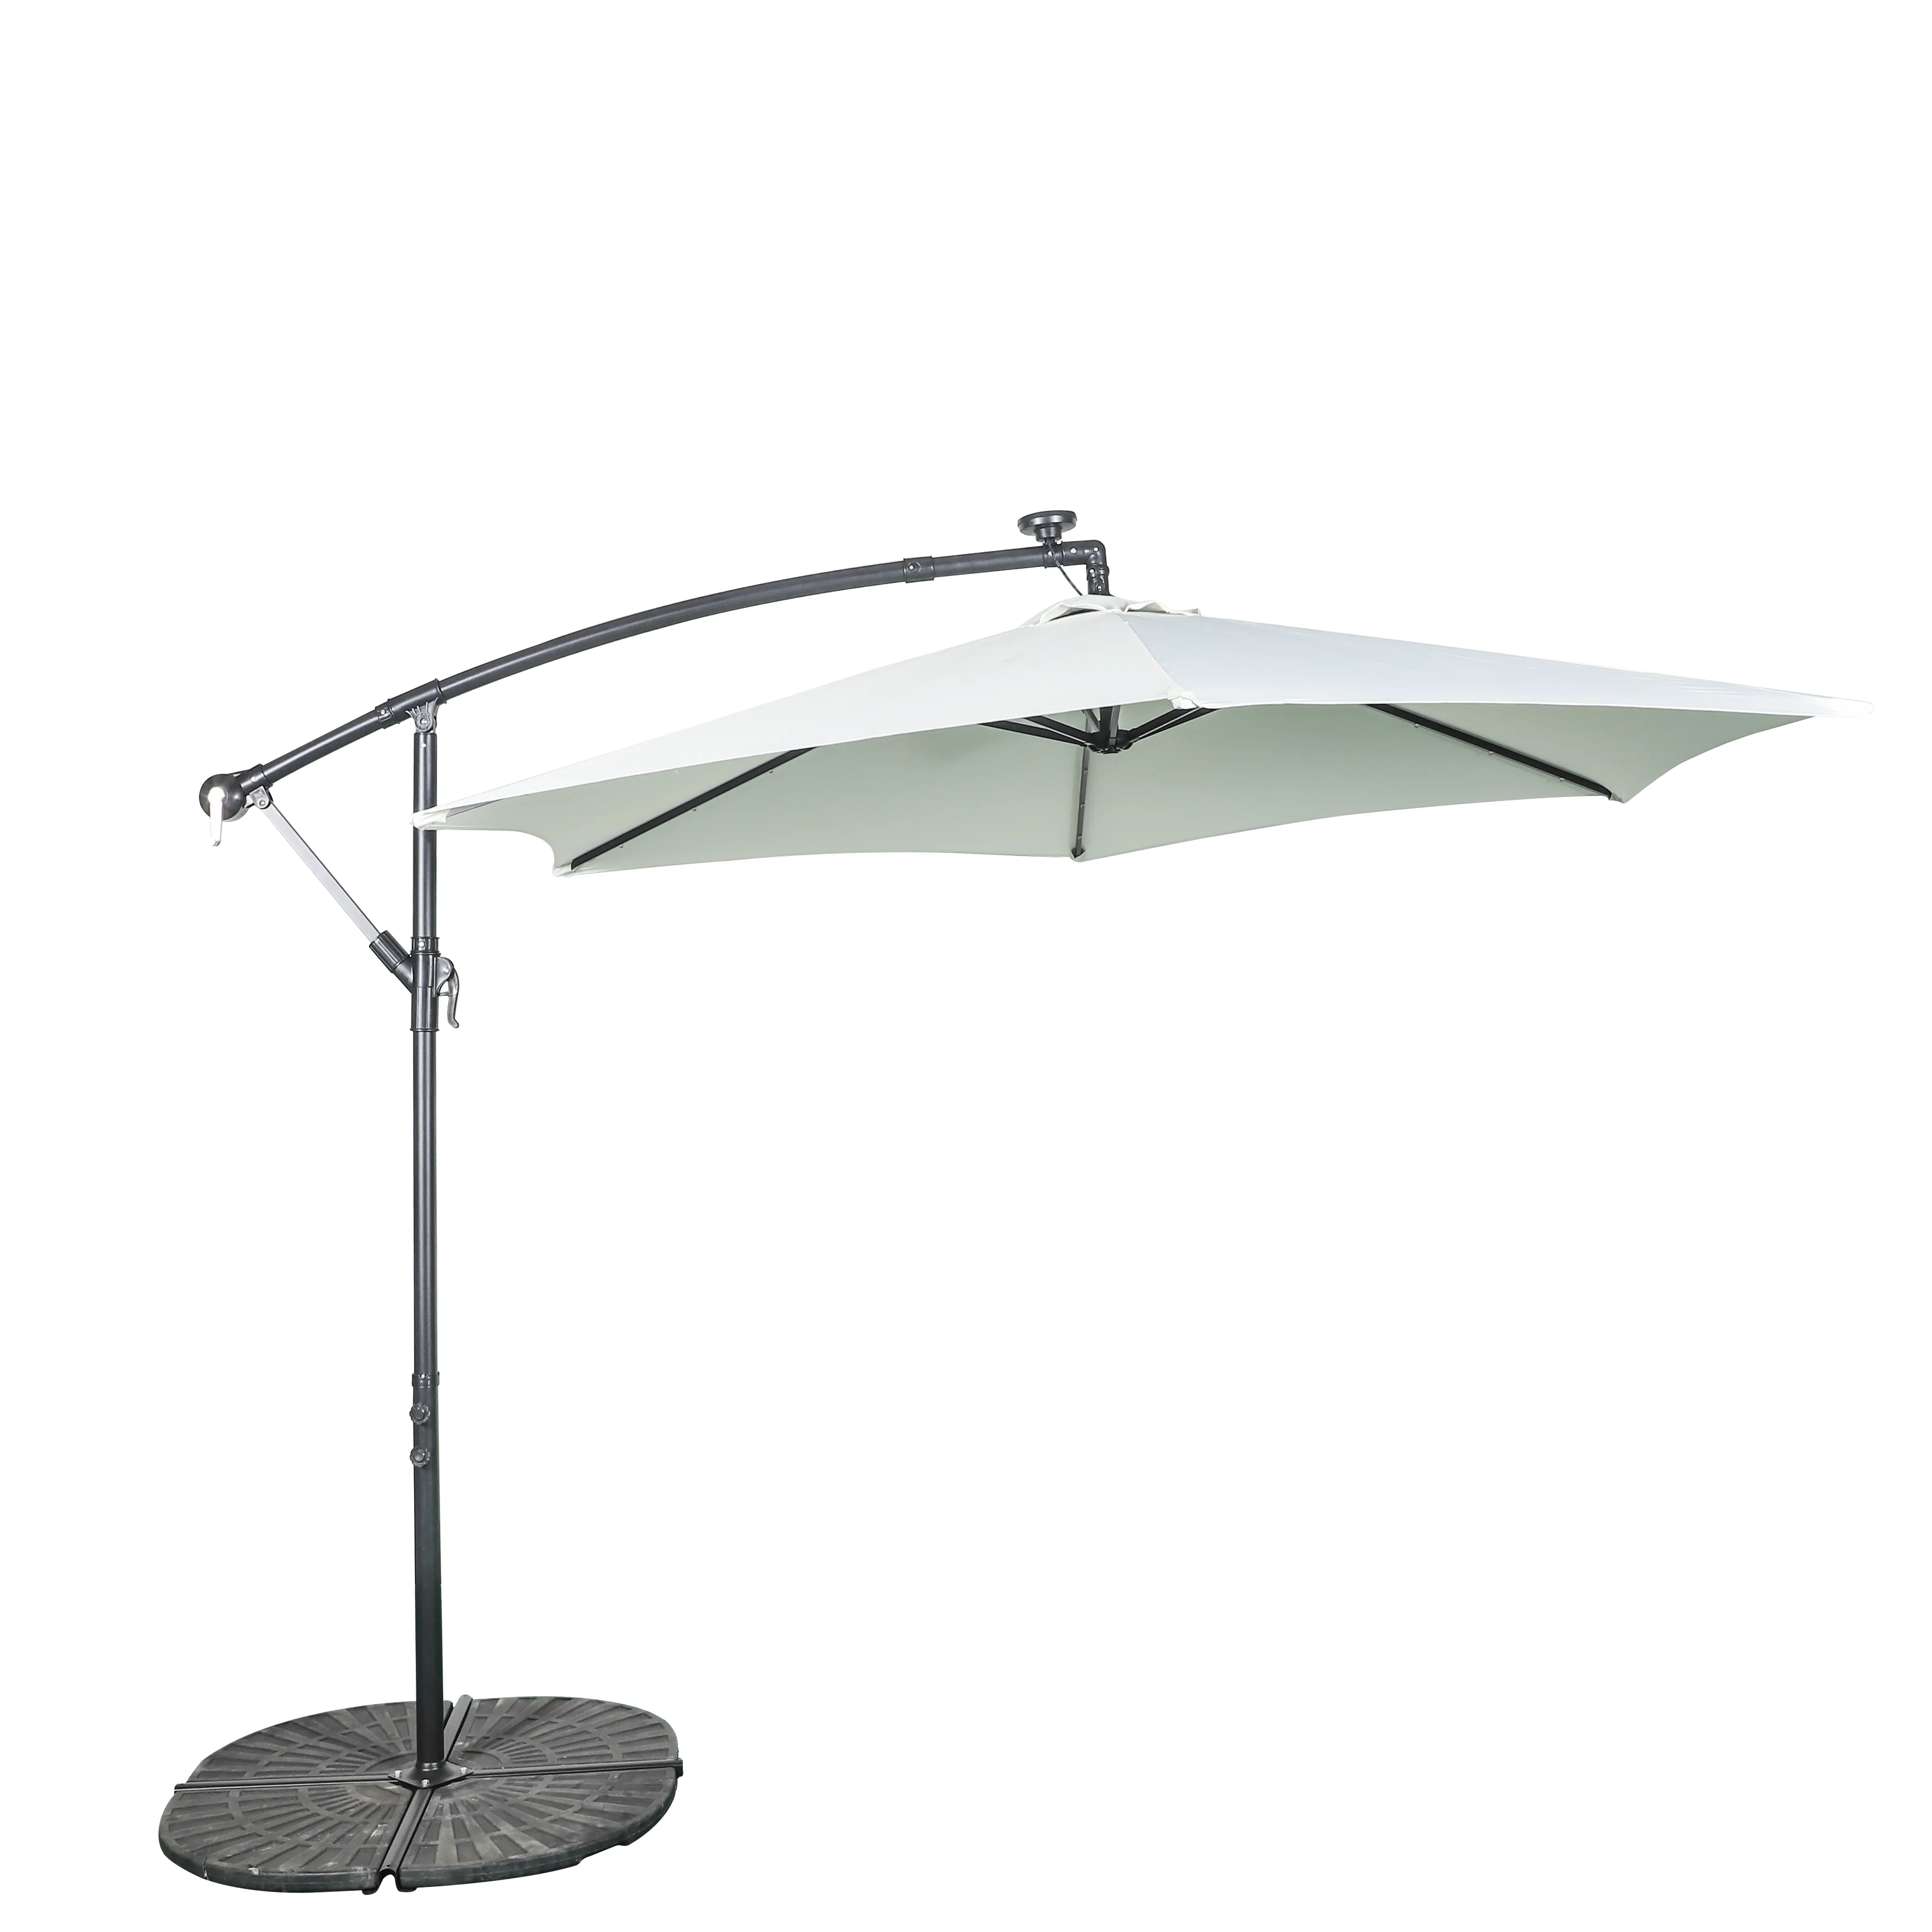 HONGGUAN payung gantung pisang tahan air, payung besi gantung kanvas matahari teras pantai taman dengan LED